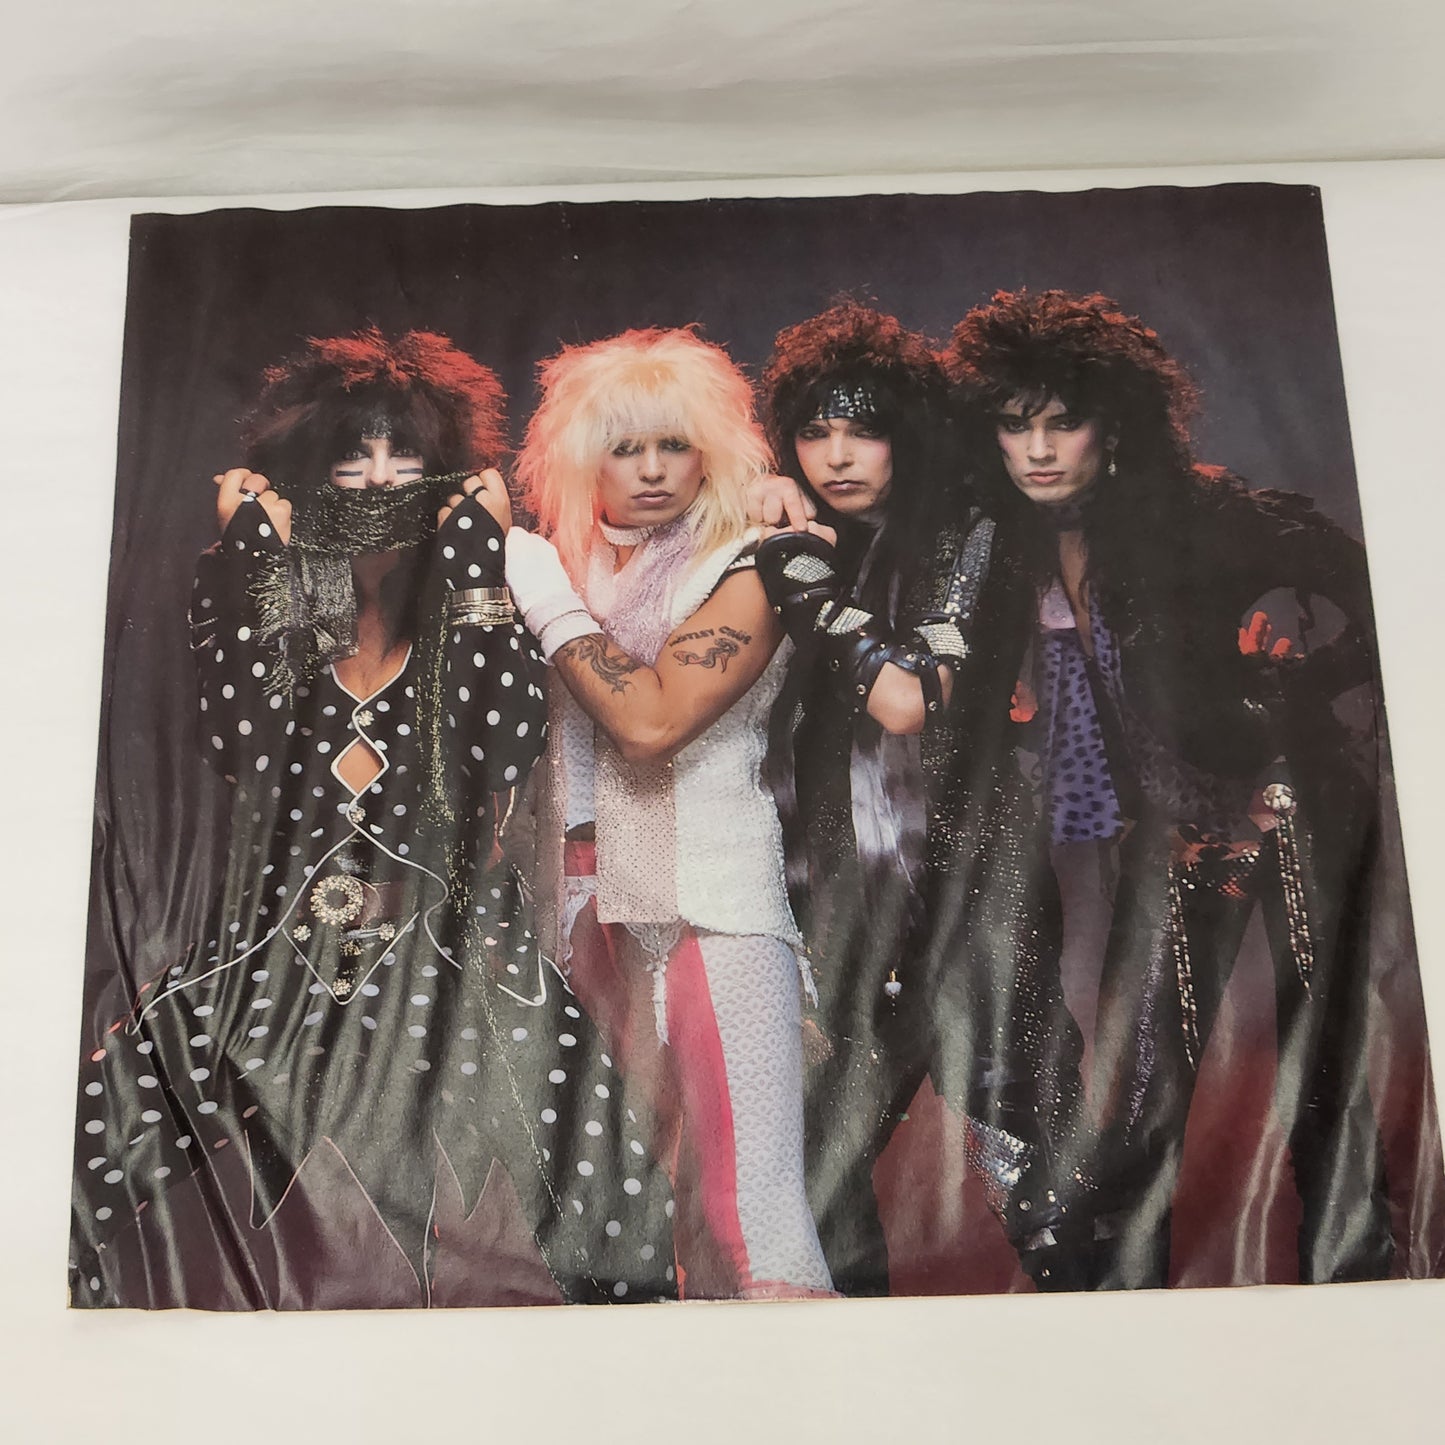 Motley Crue "Theatre Of Pain" 1985 Hard Rock Glam Metal Record Album